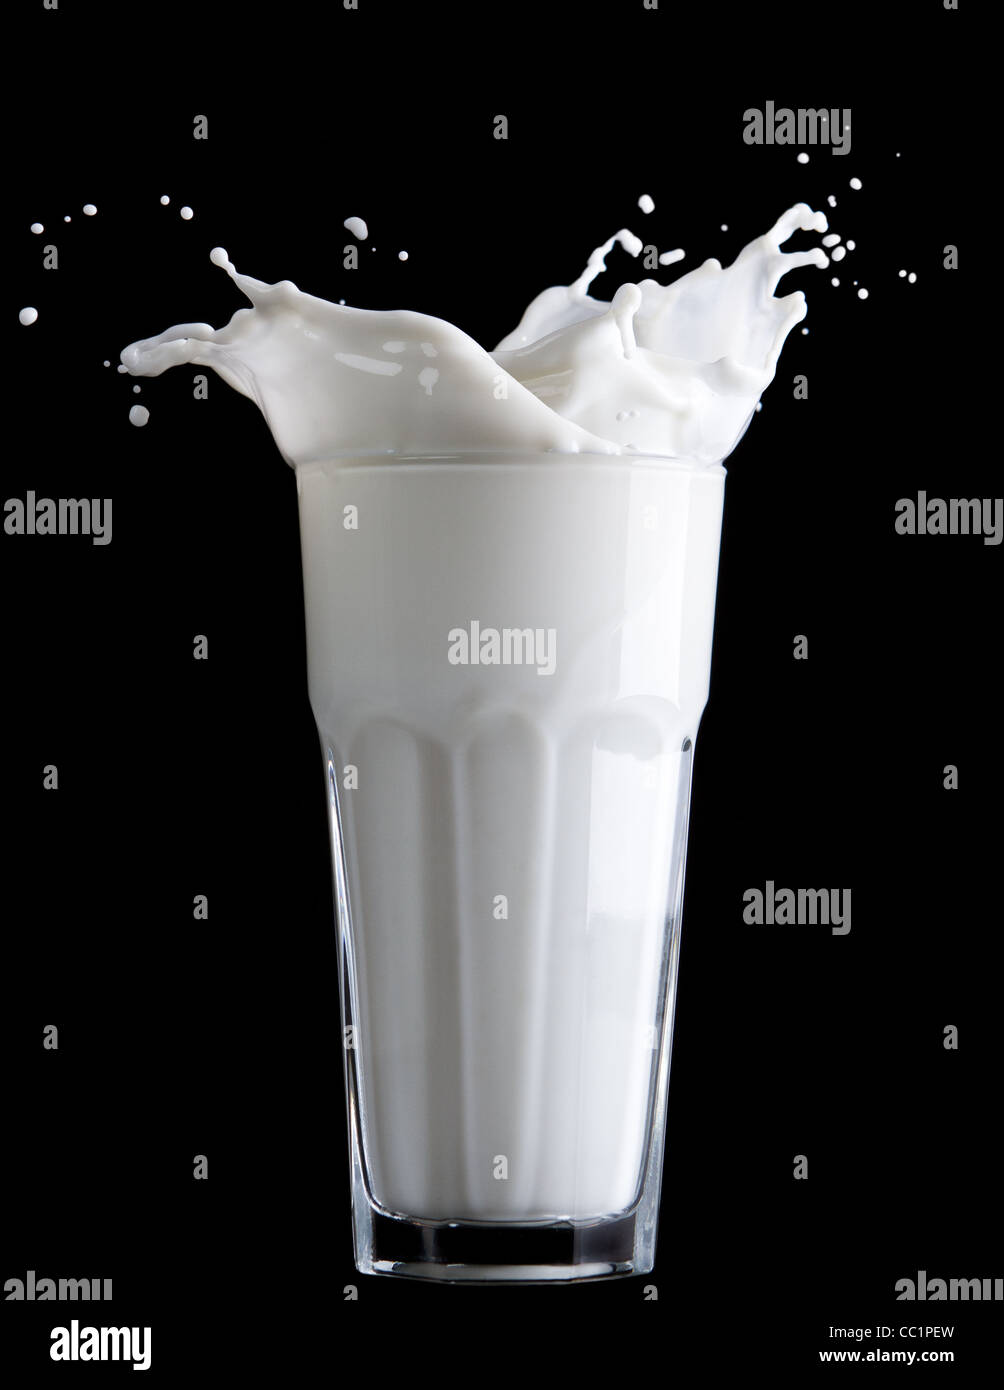 https://c8.alamy.com/comp/CC1PEW/milk-glass-and-milk-splash-on-black-background-CC1PEW.jpg